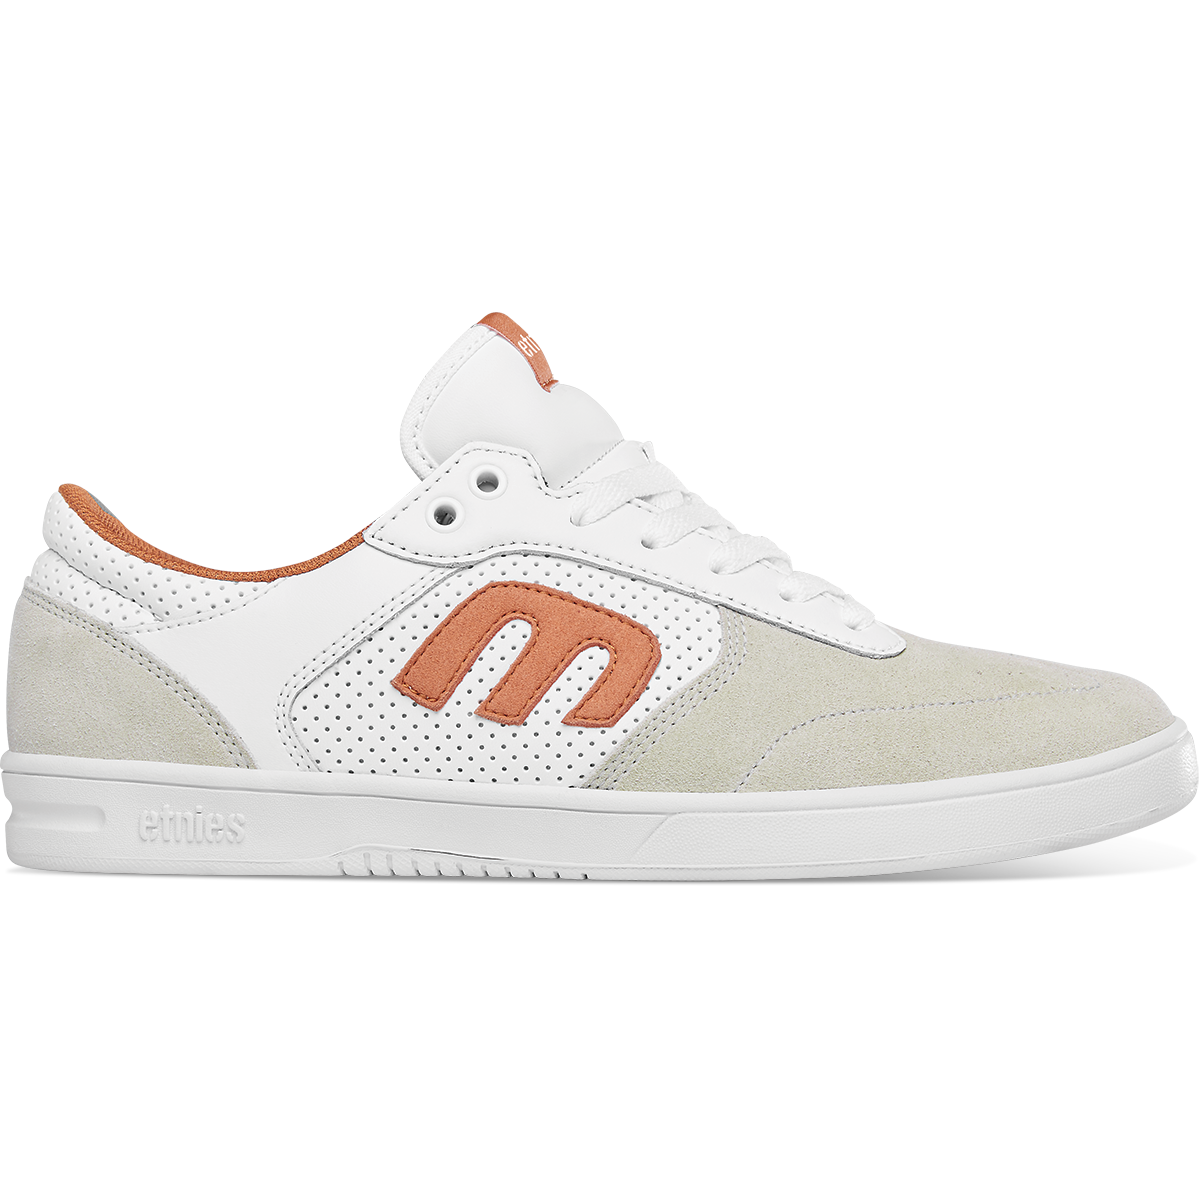 White/Orange Windrow Etnies Skateboarding Shoe